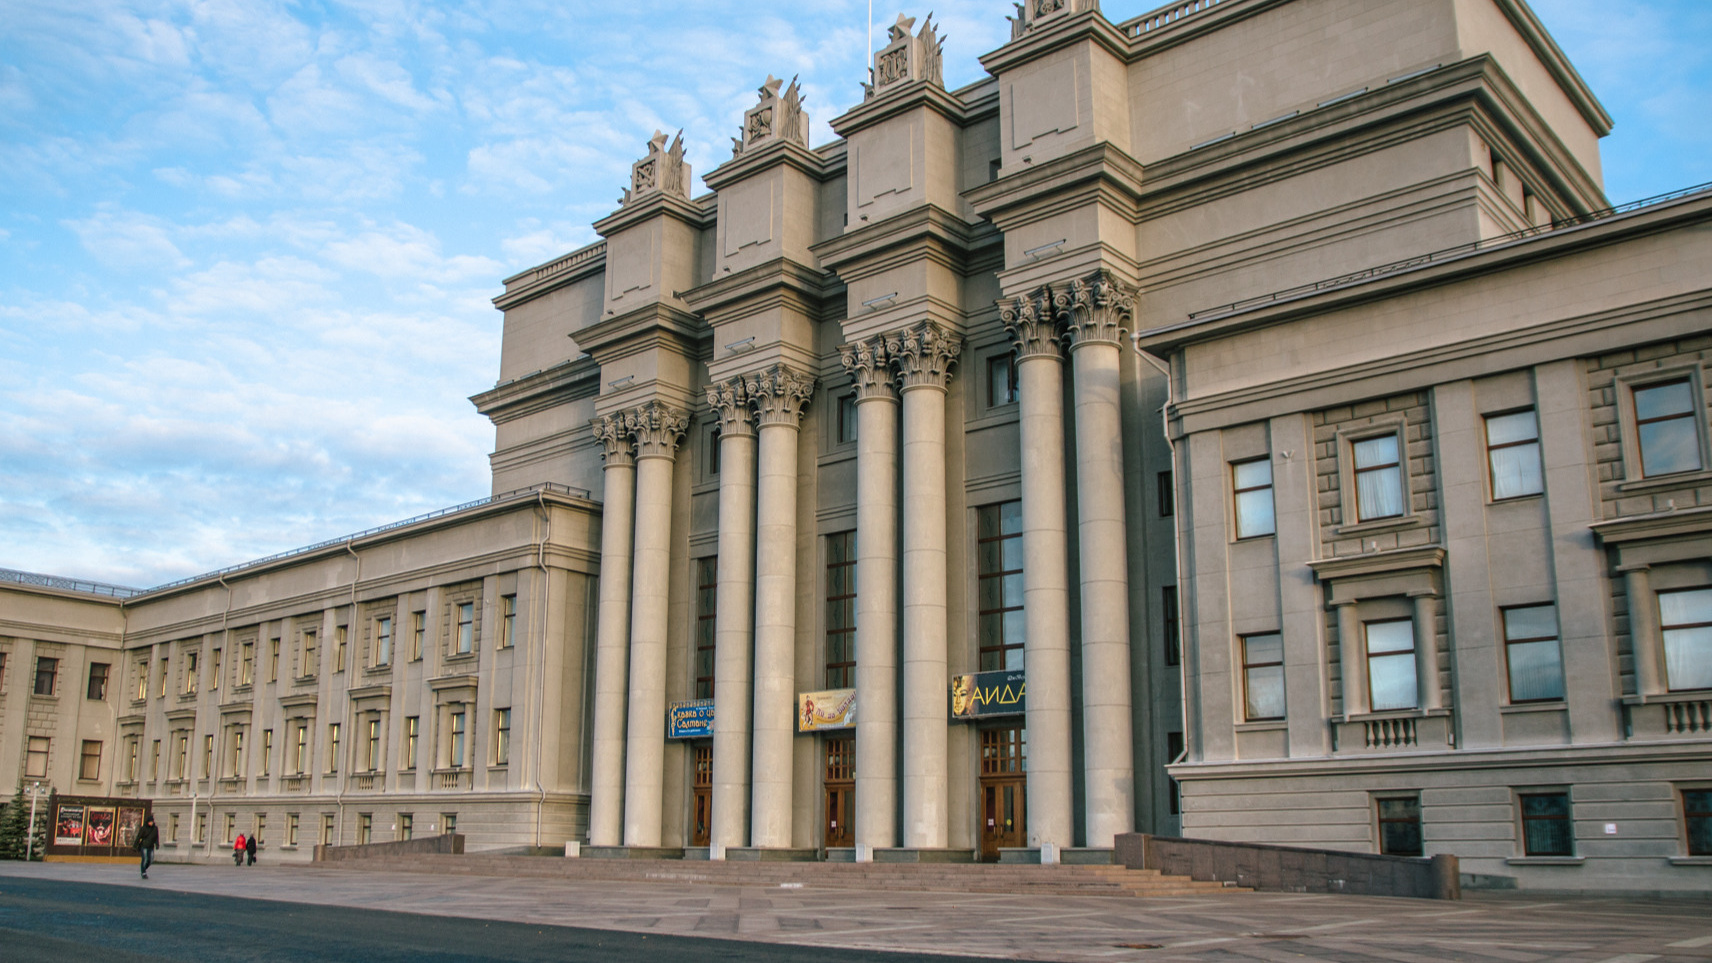 Театр оперы и балета Самара фасад